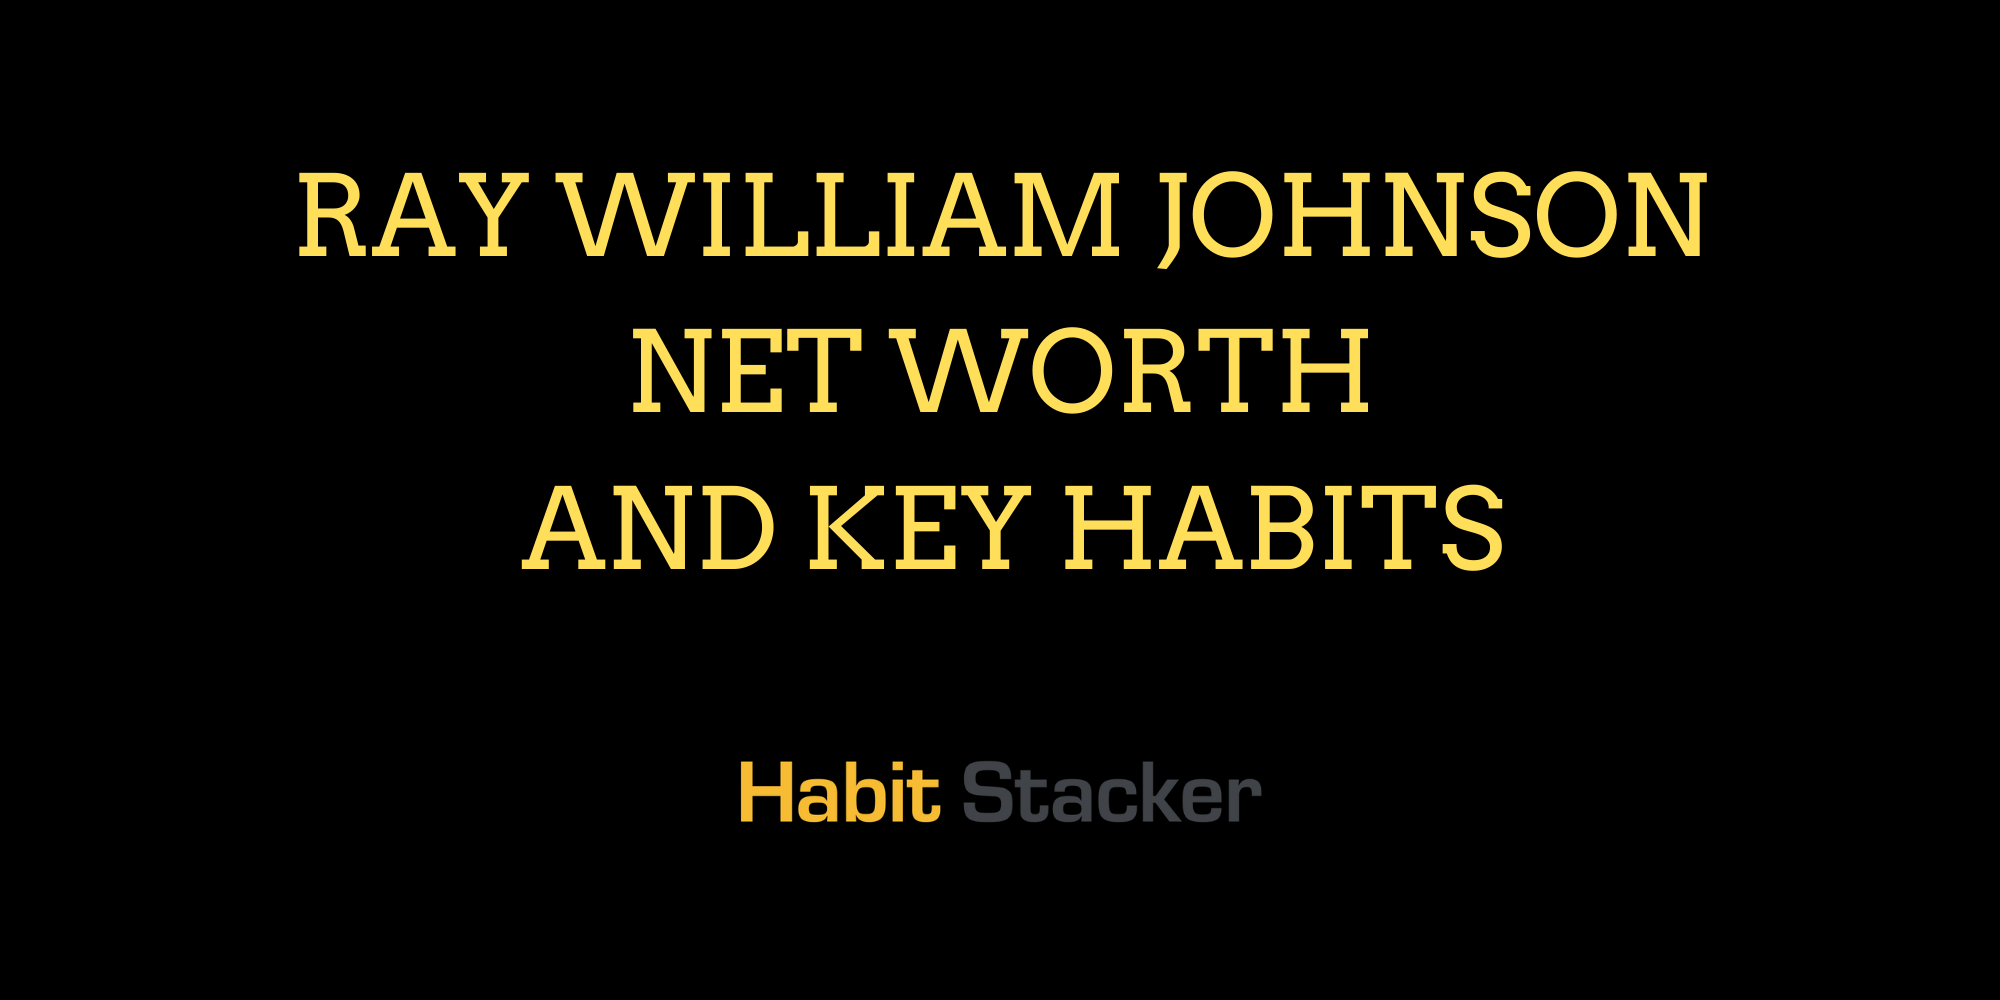 Ray William Johnson Net Worth And Key Habits